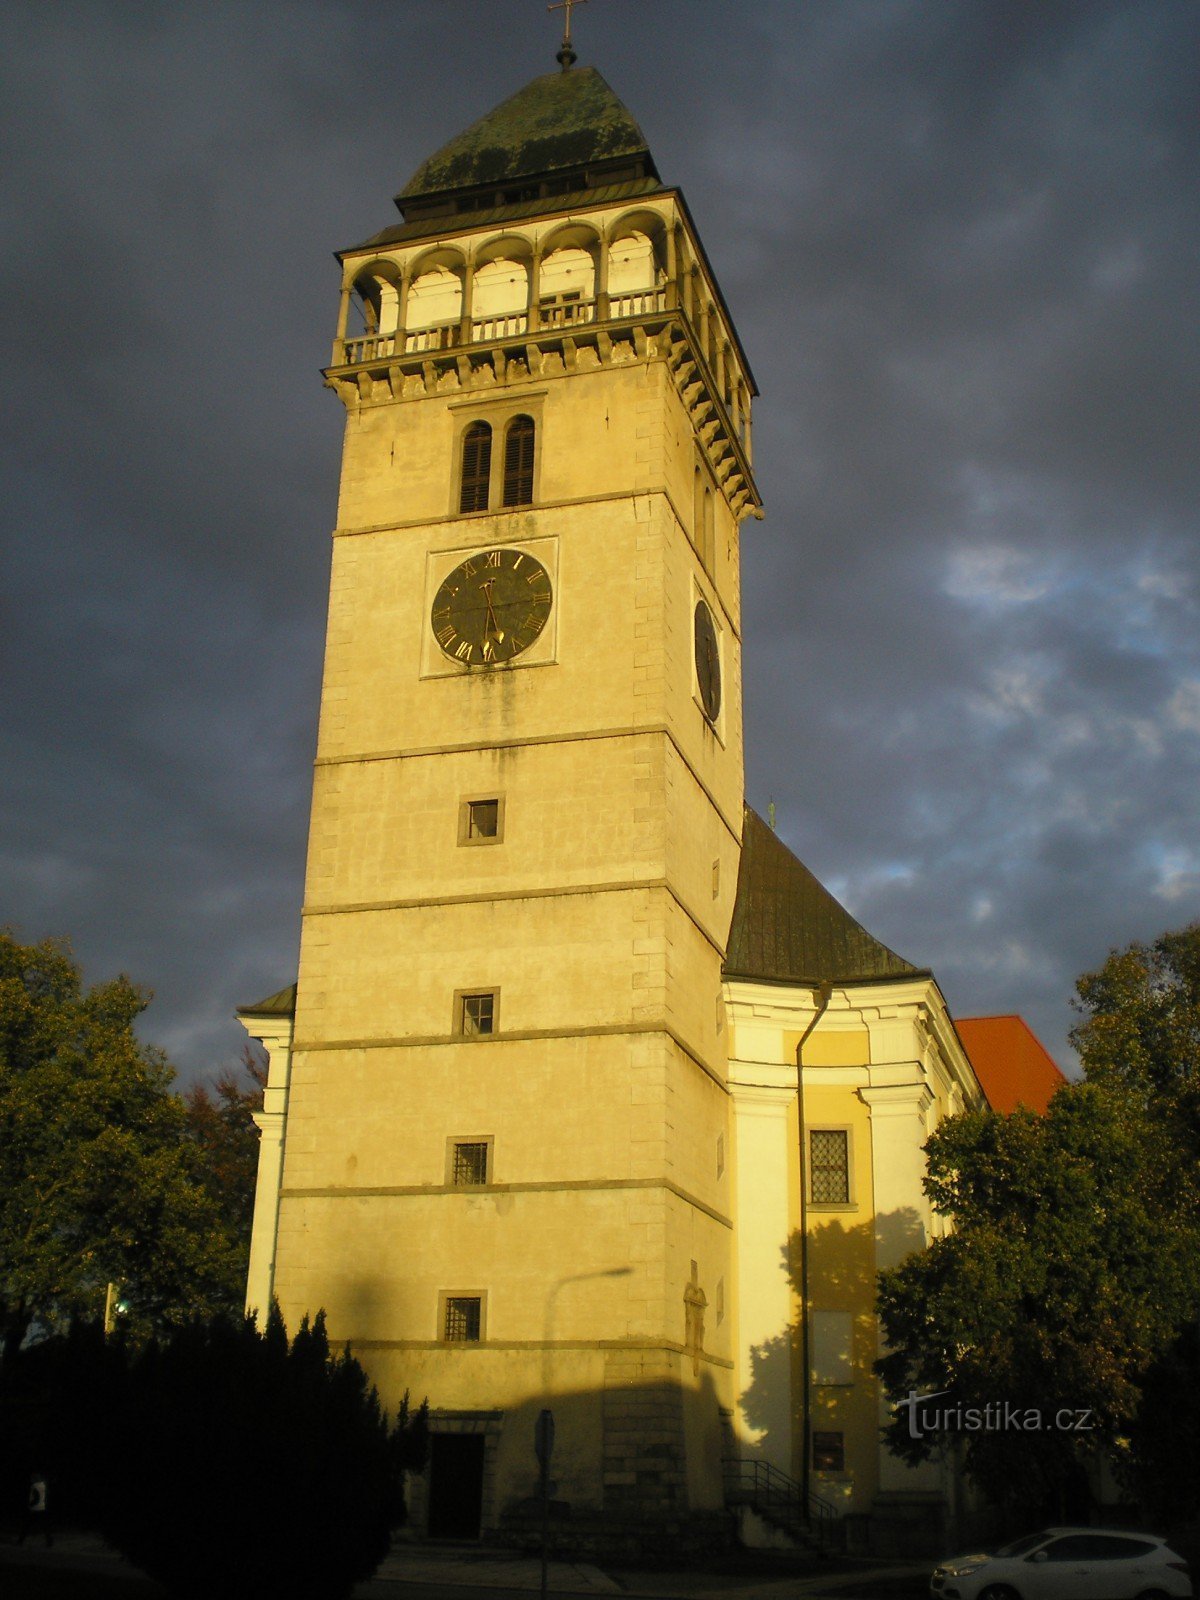 Dačice - Renaissance tower